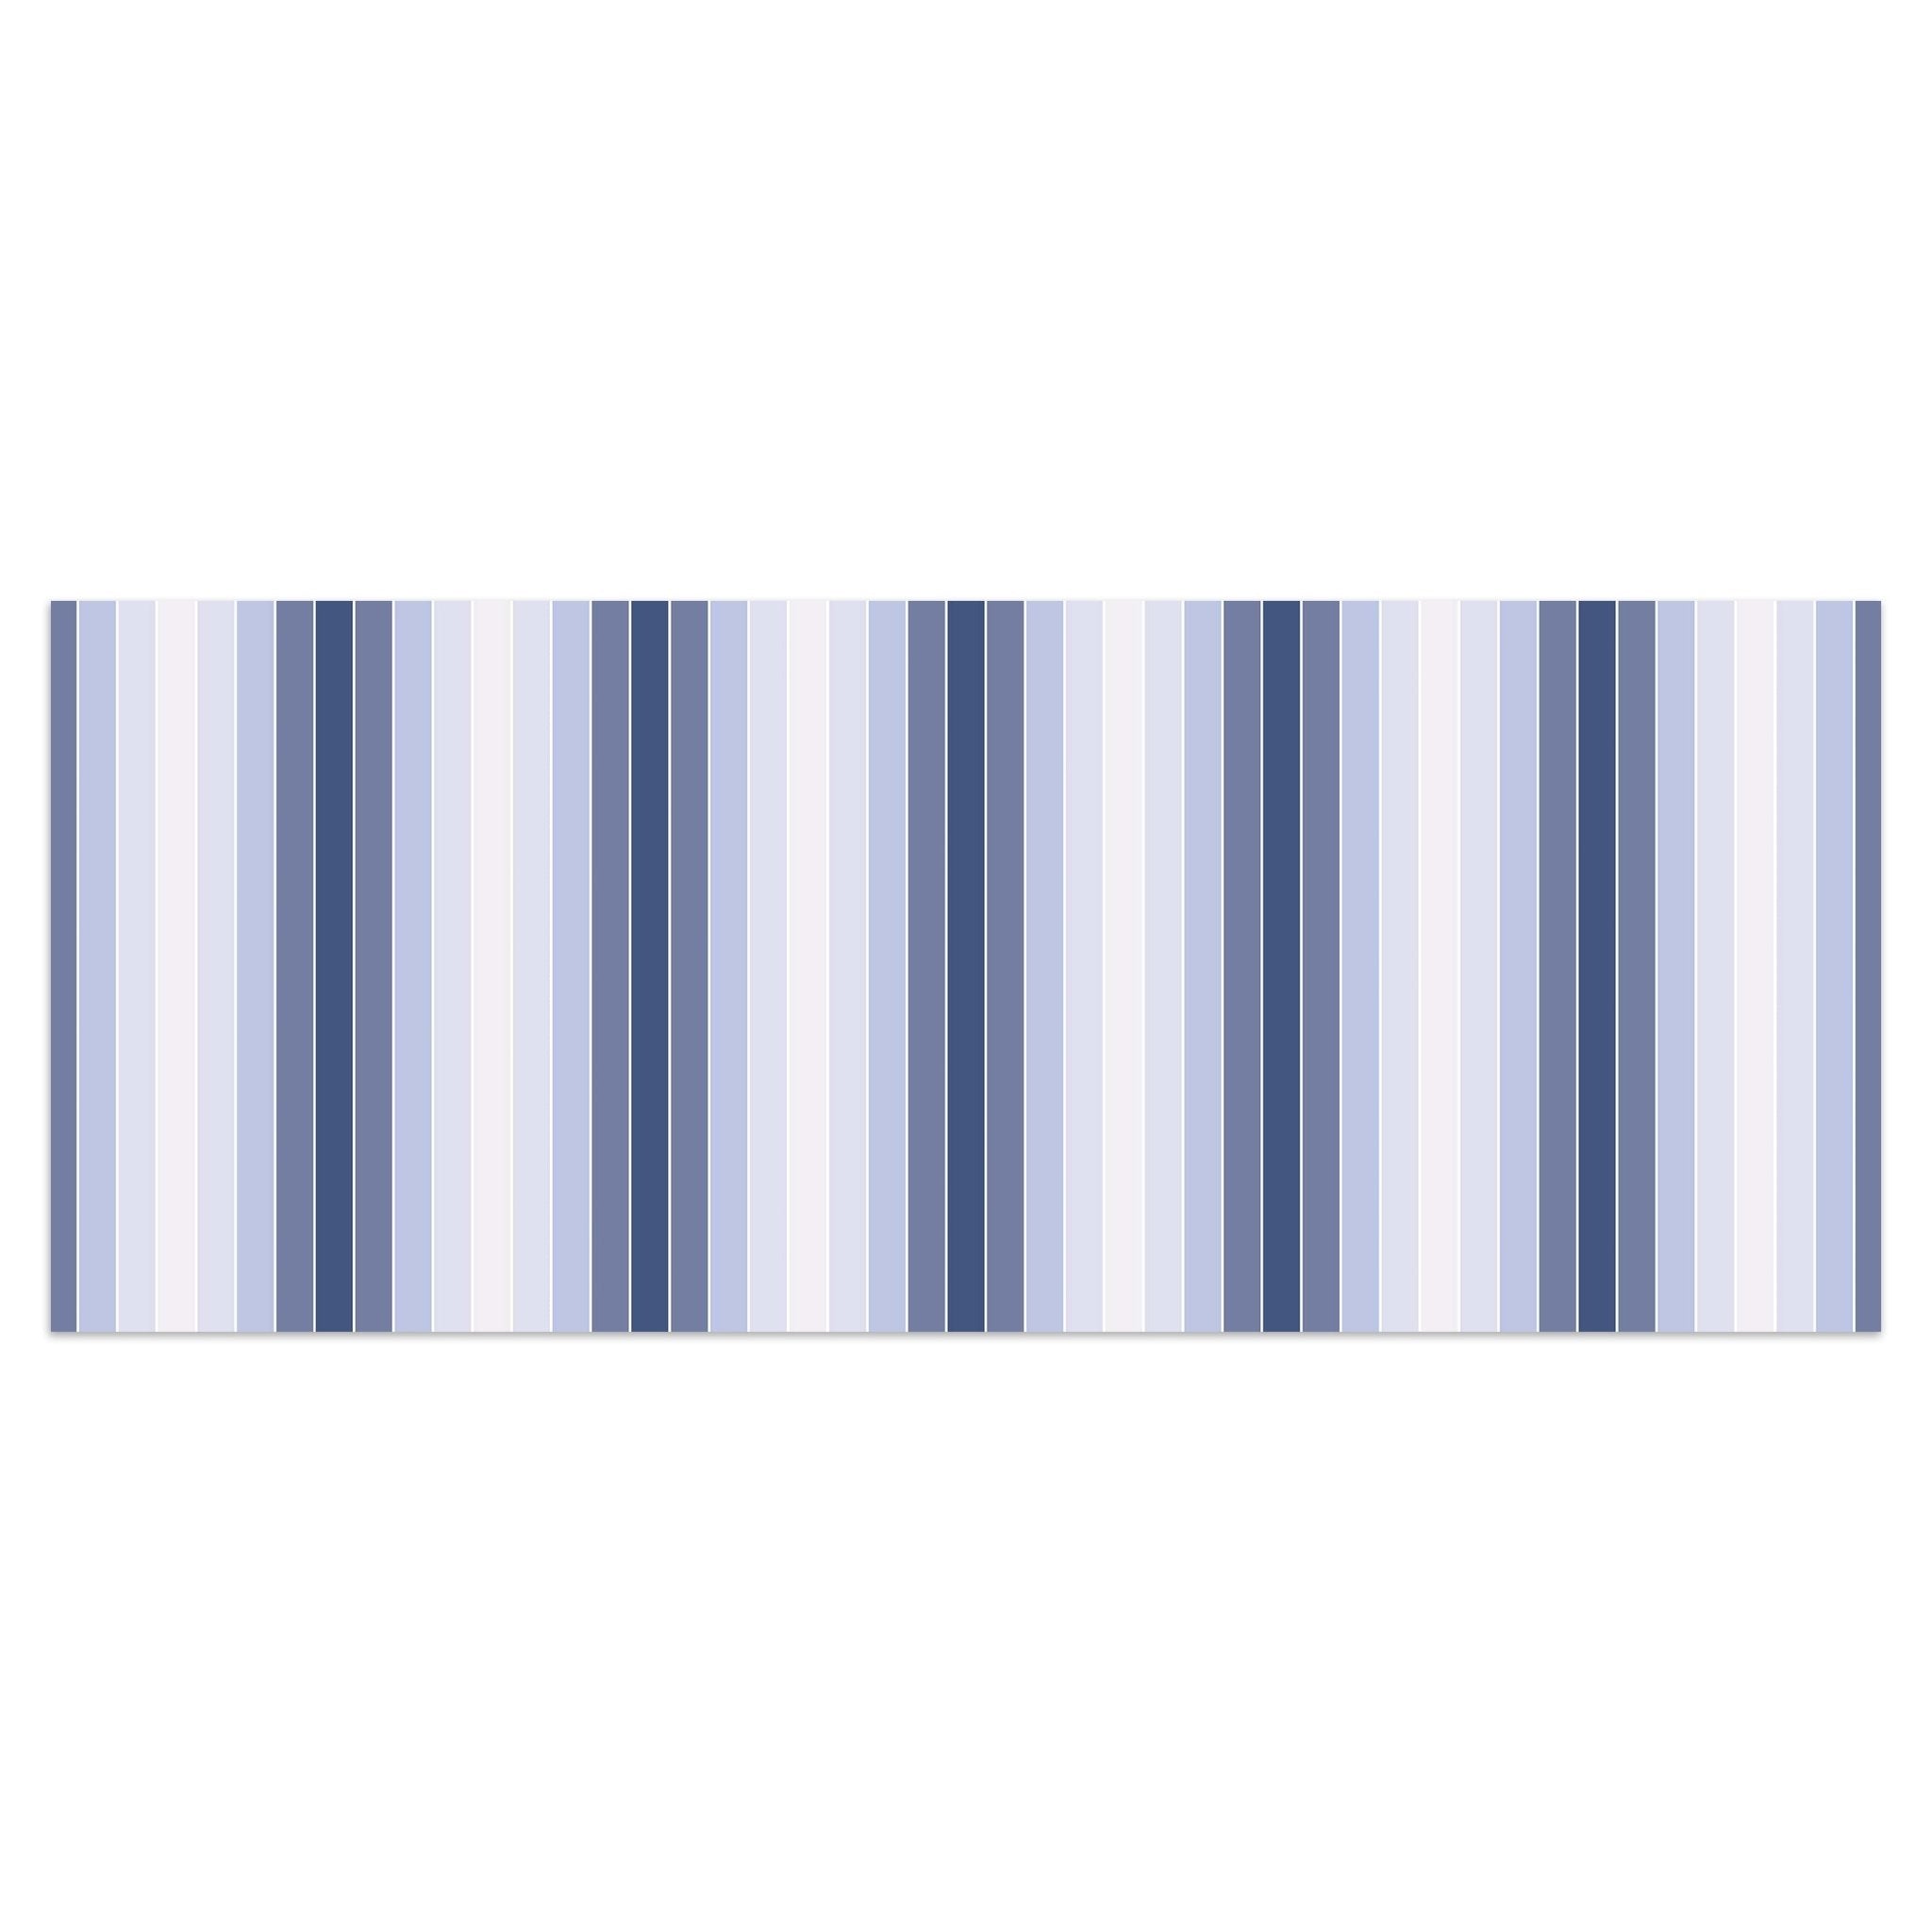 Leinwandbild Mattes Blau Muster M0088 kaufen - Bild 1